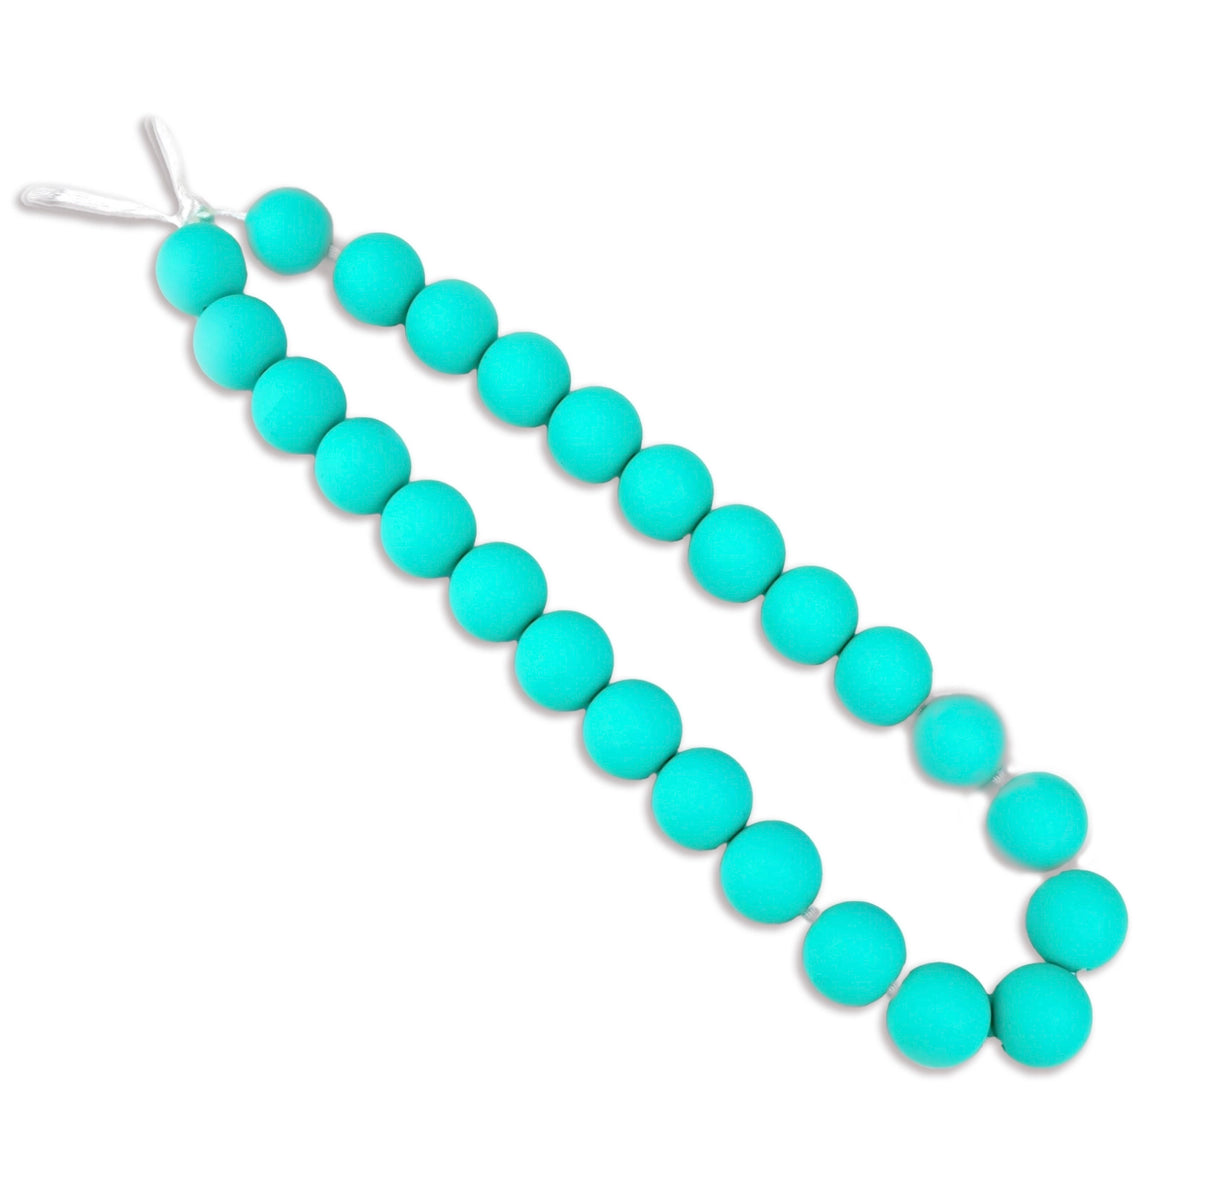 silicone bead round turquoise